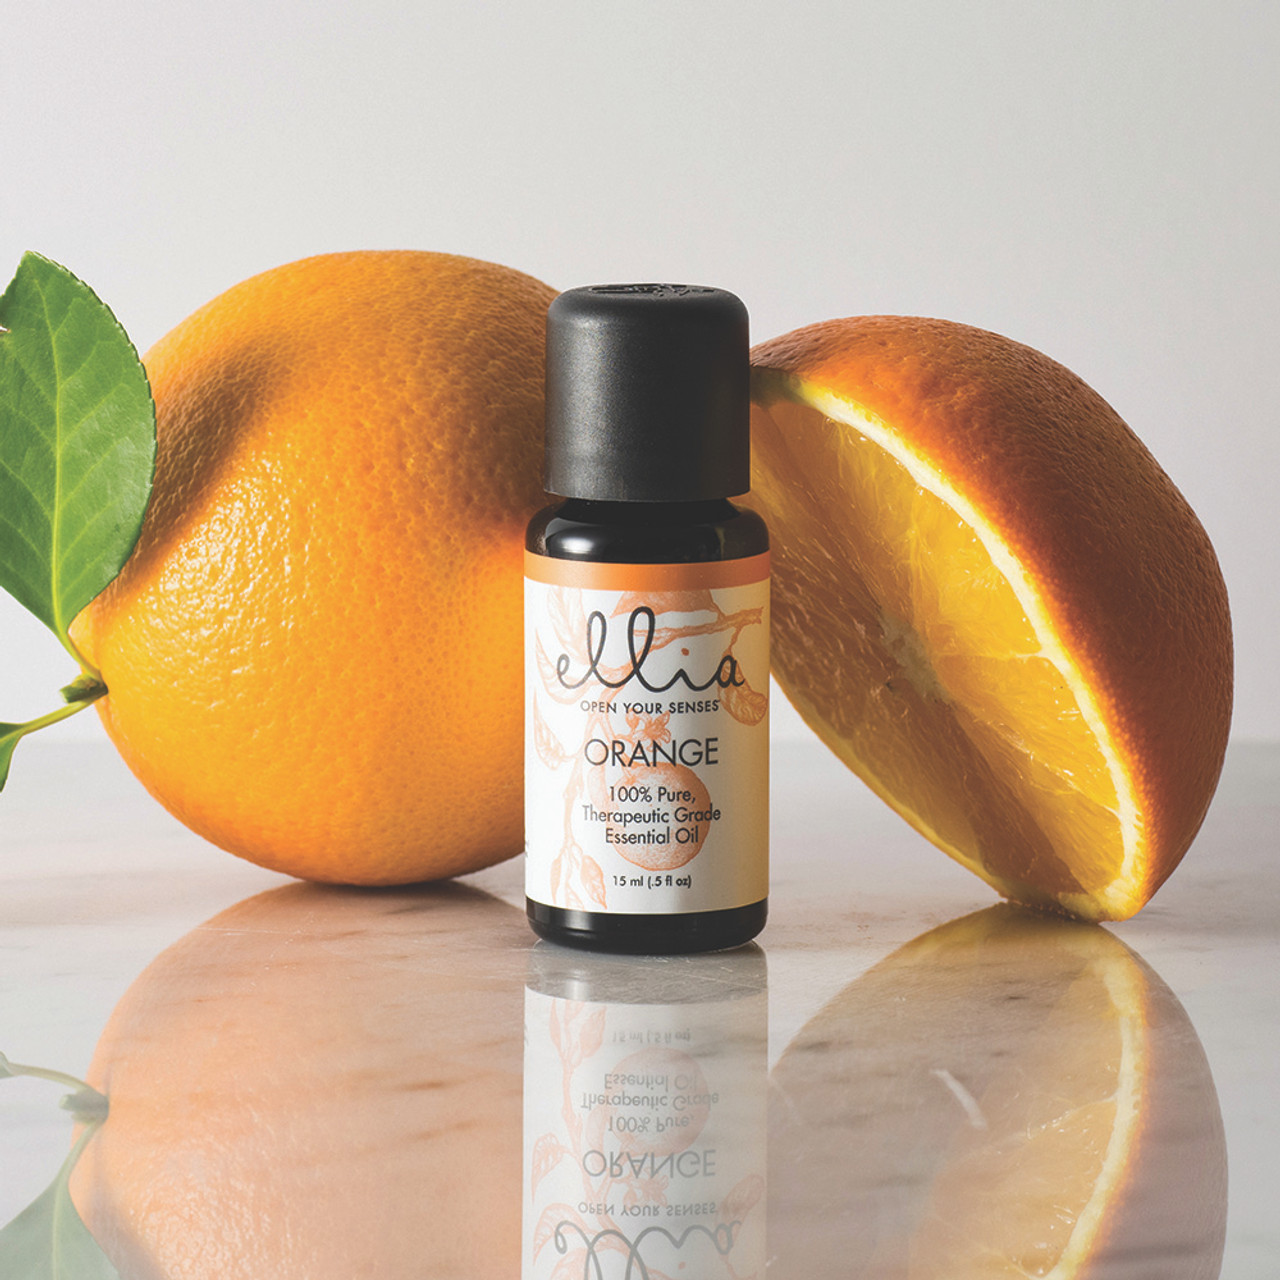 Liliya's Aroma Wild Orange 07, Botanical Perfume, Orange & Orange Blossom  Essential Oils, Tropical Brazilian Scent 3.4 fl.oz 